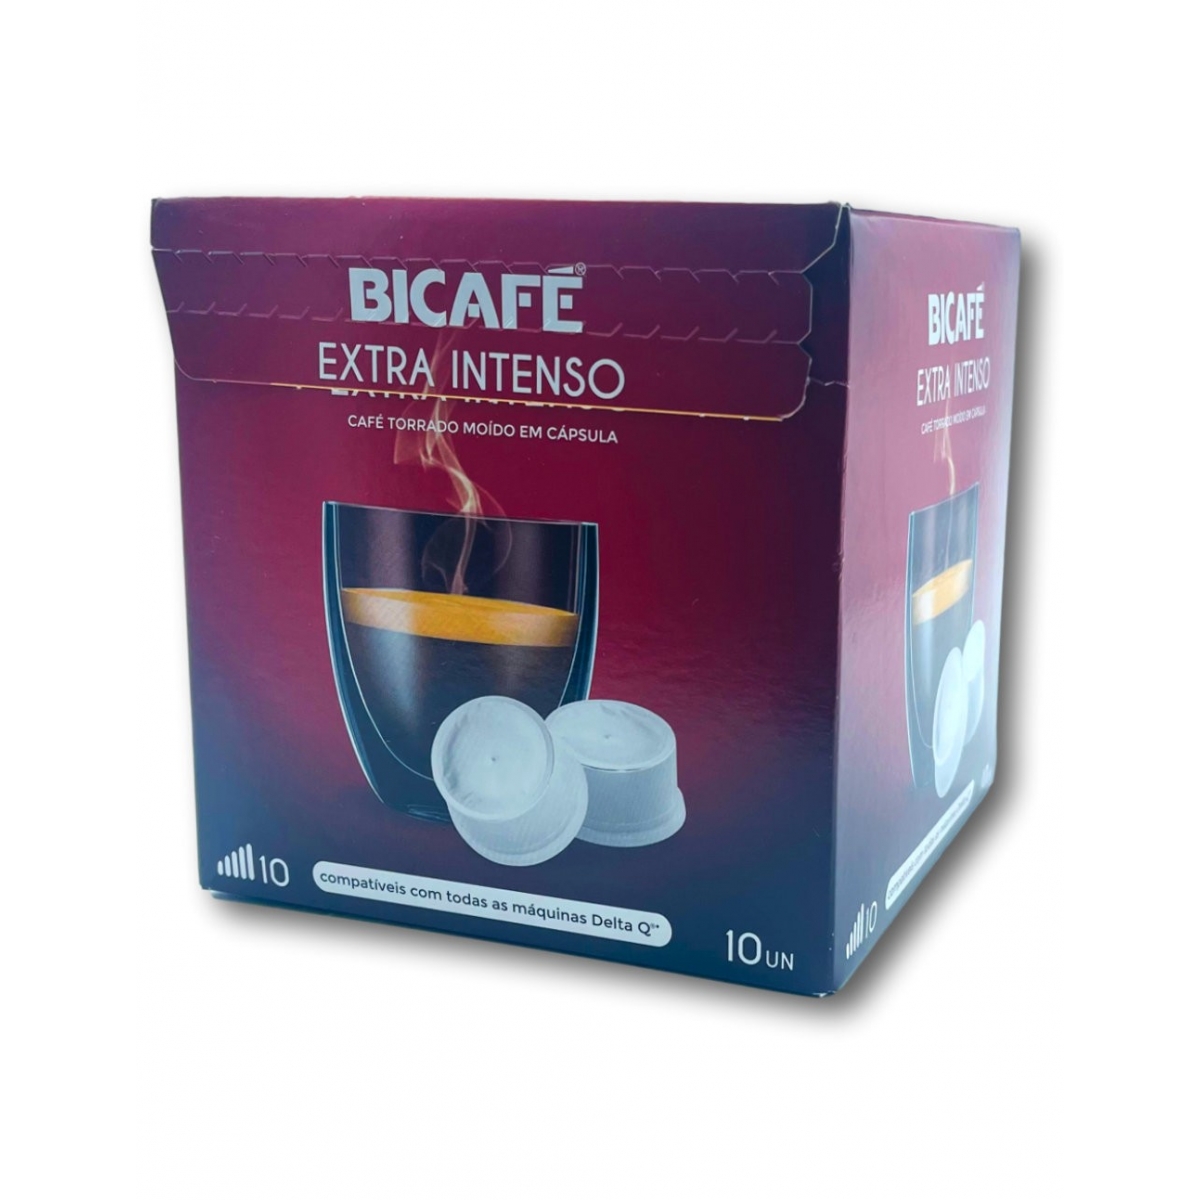 Cápsulas Café Bicafé Compatibles Delta Q * Extra Intenso 10 Un